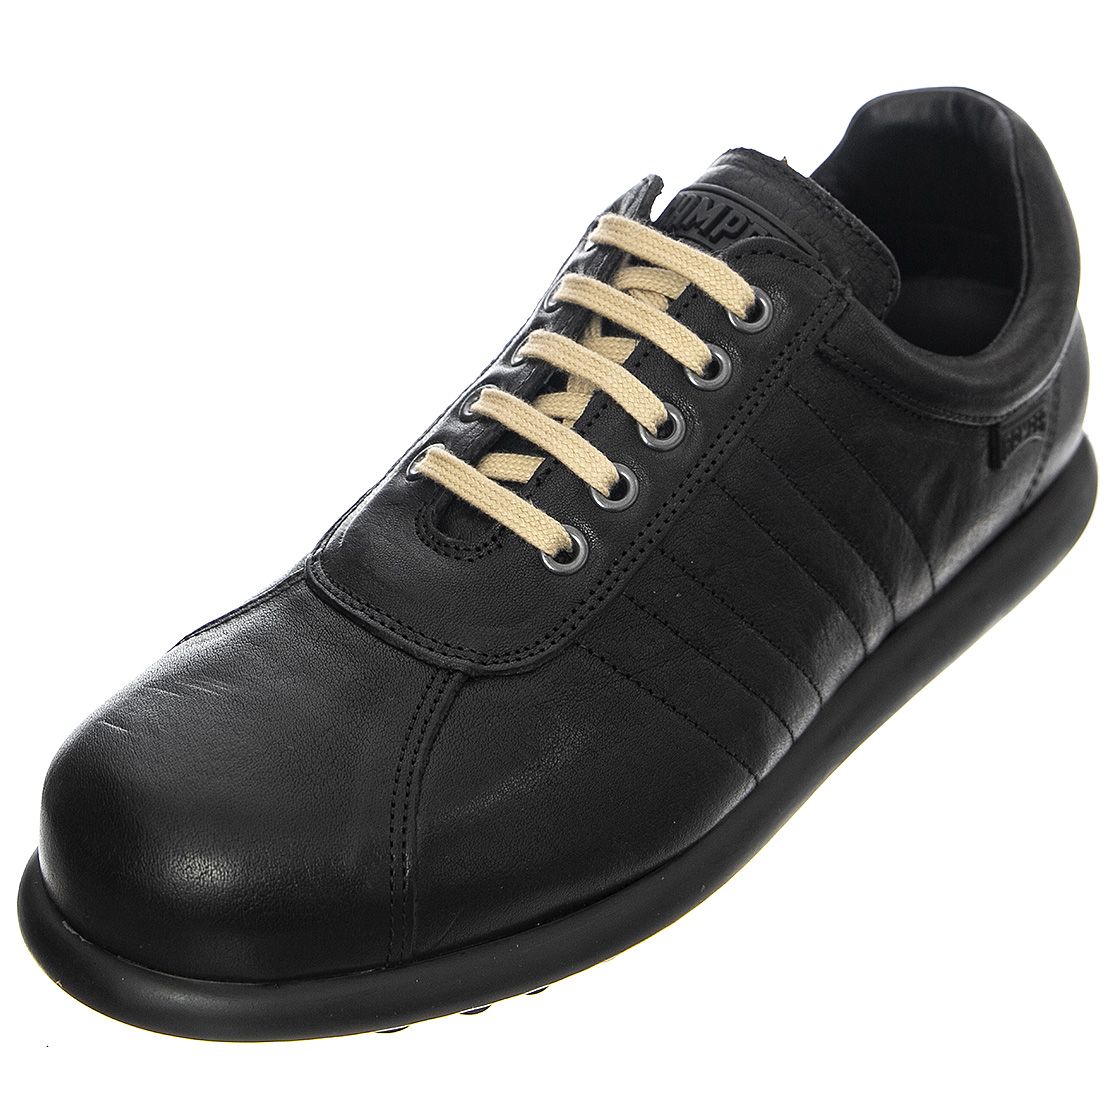 Soweto Negro/Ariel Negro (LFT) Shoes - Scarpe Stringate Profilo Basso Uomo  Nere